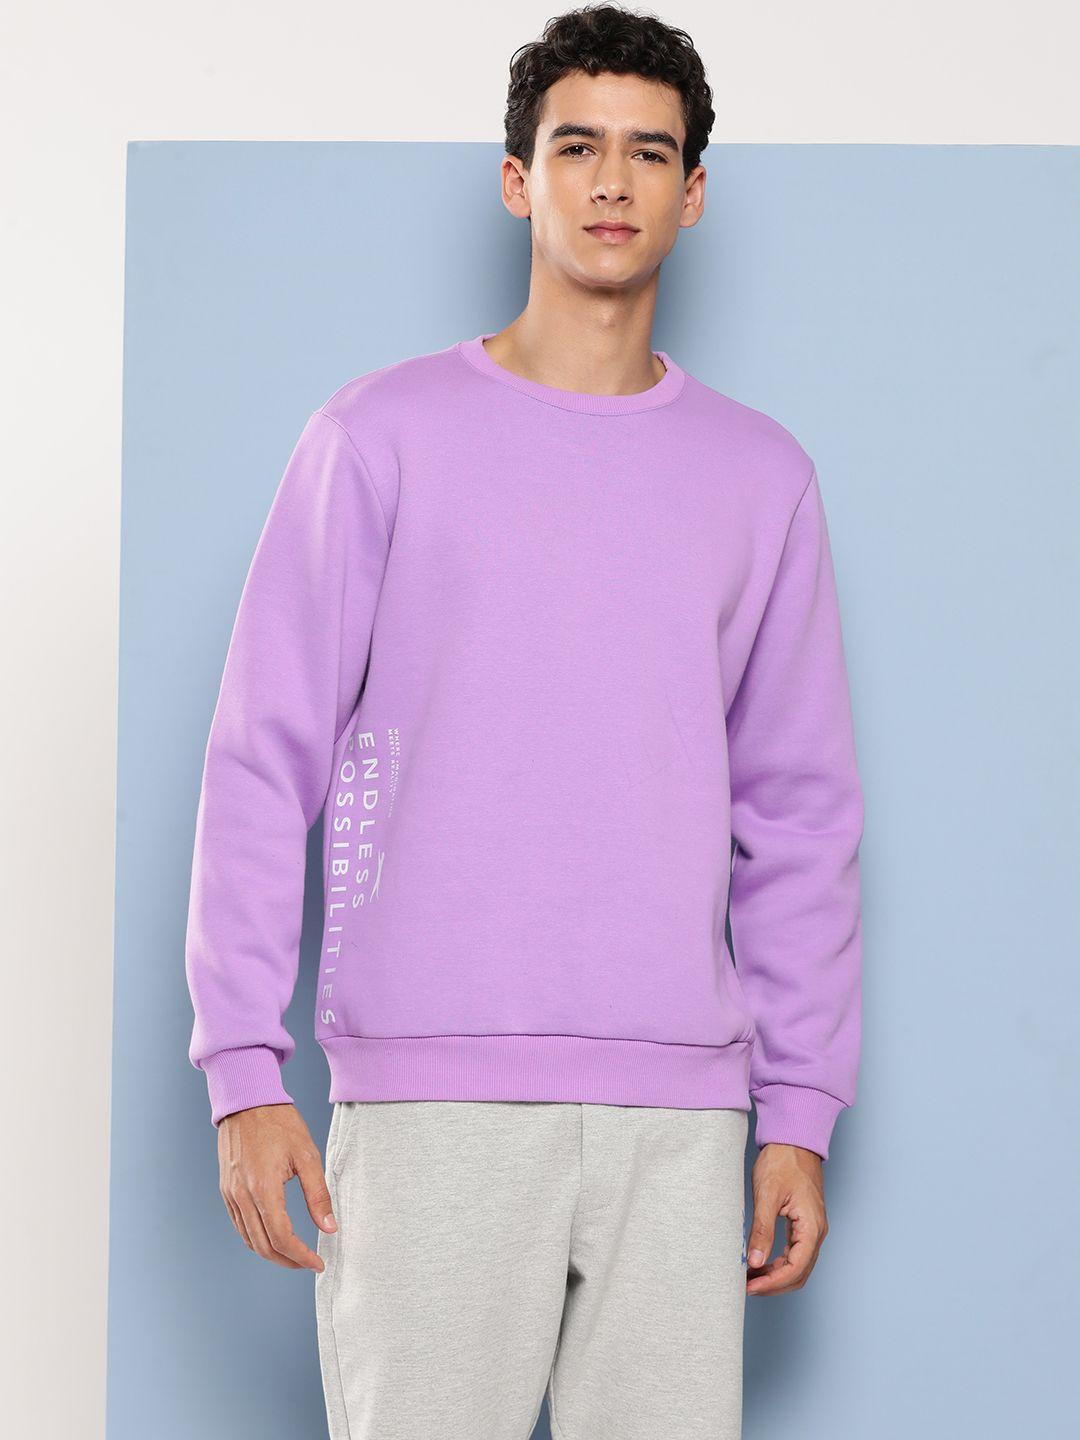 slazenger-men-typography-printed-cotton-sweatshirt